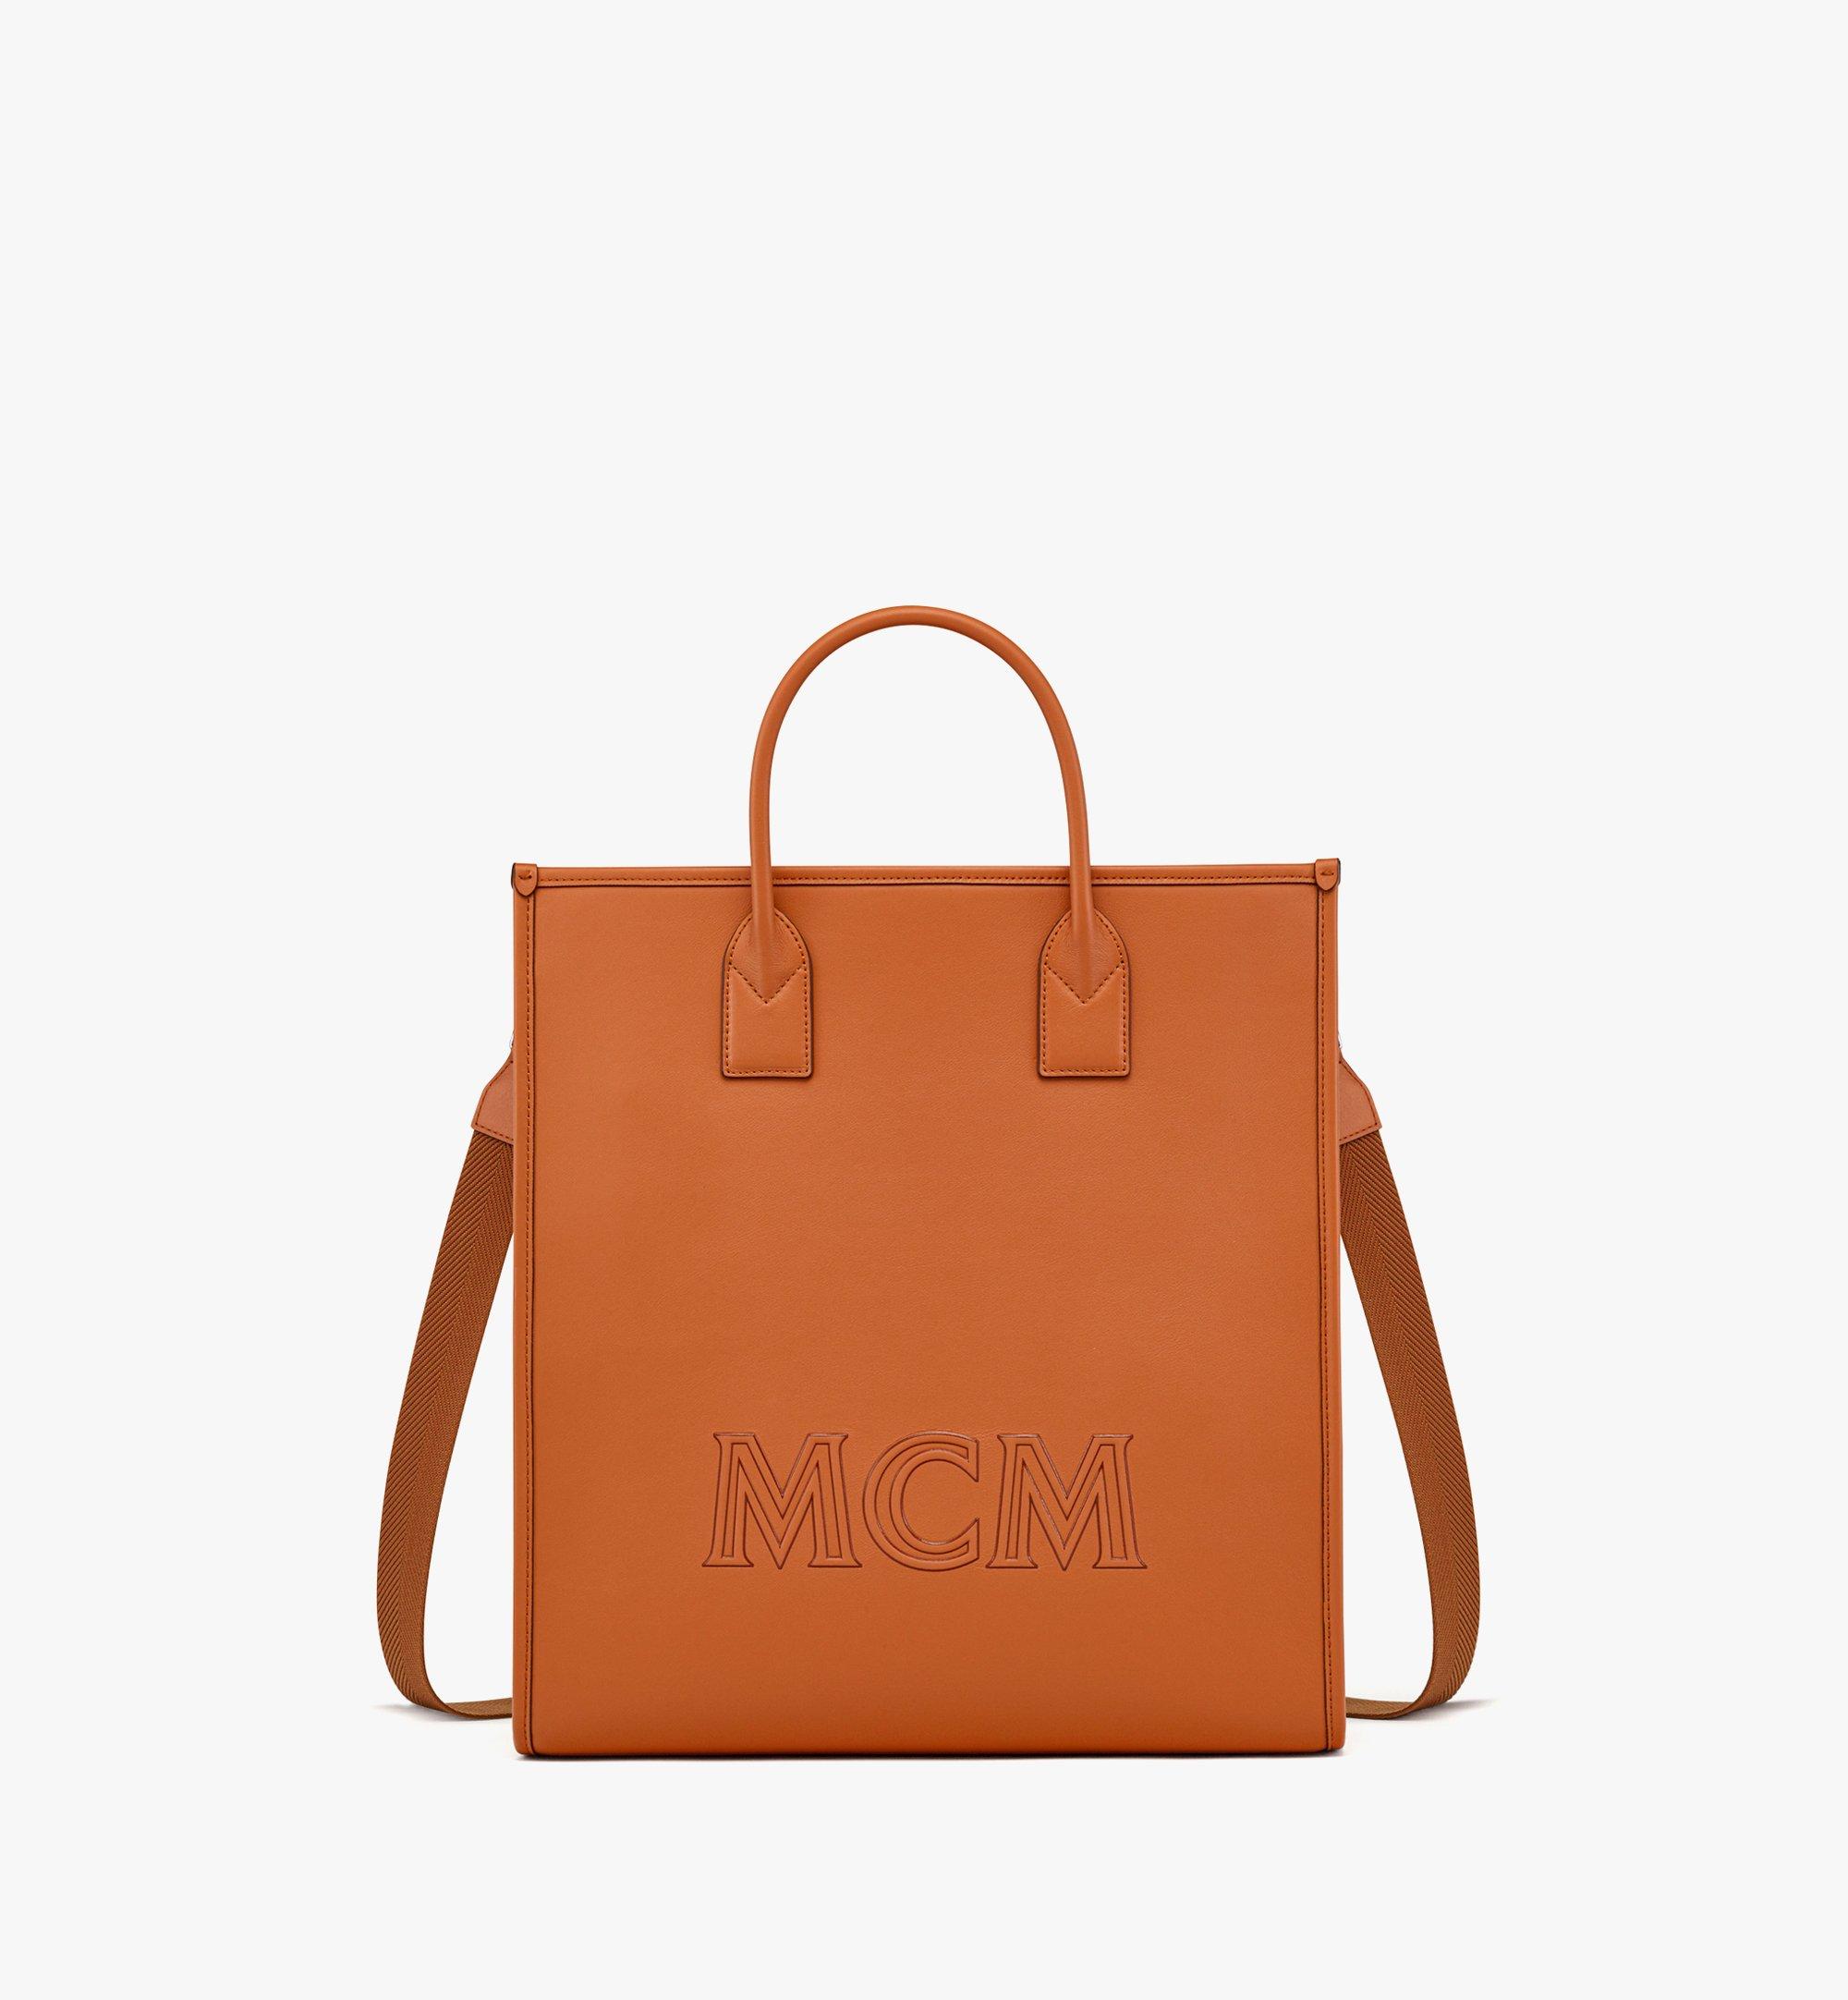 MCM Bags | MCM Official Site